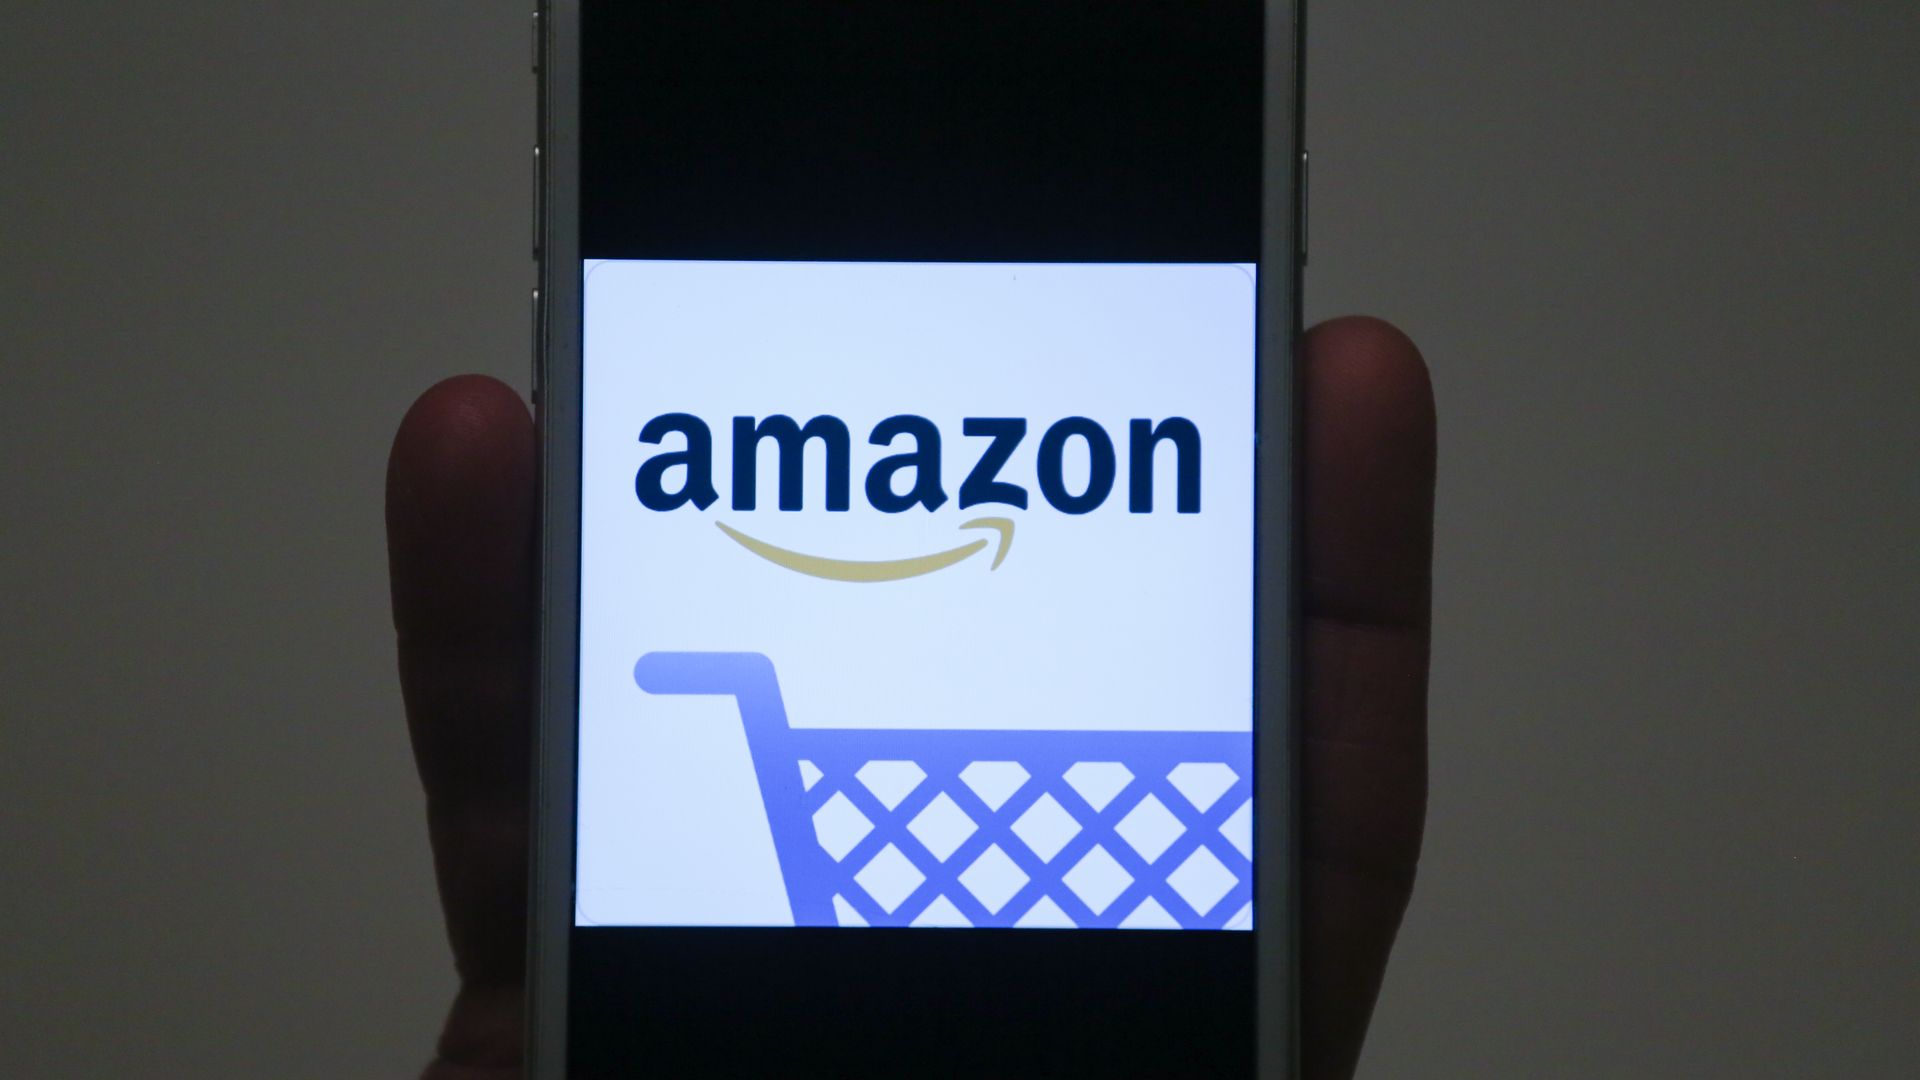 Amazon logo on a phone